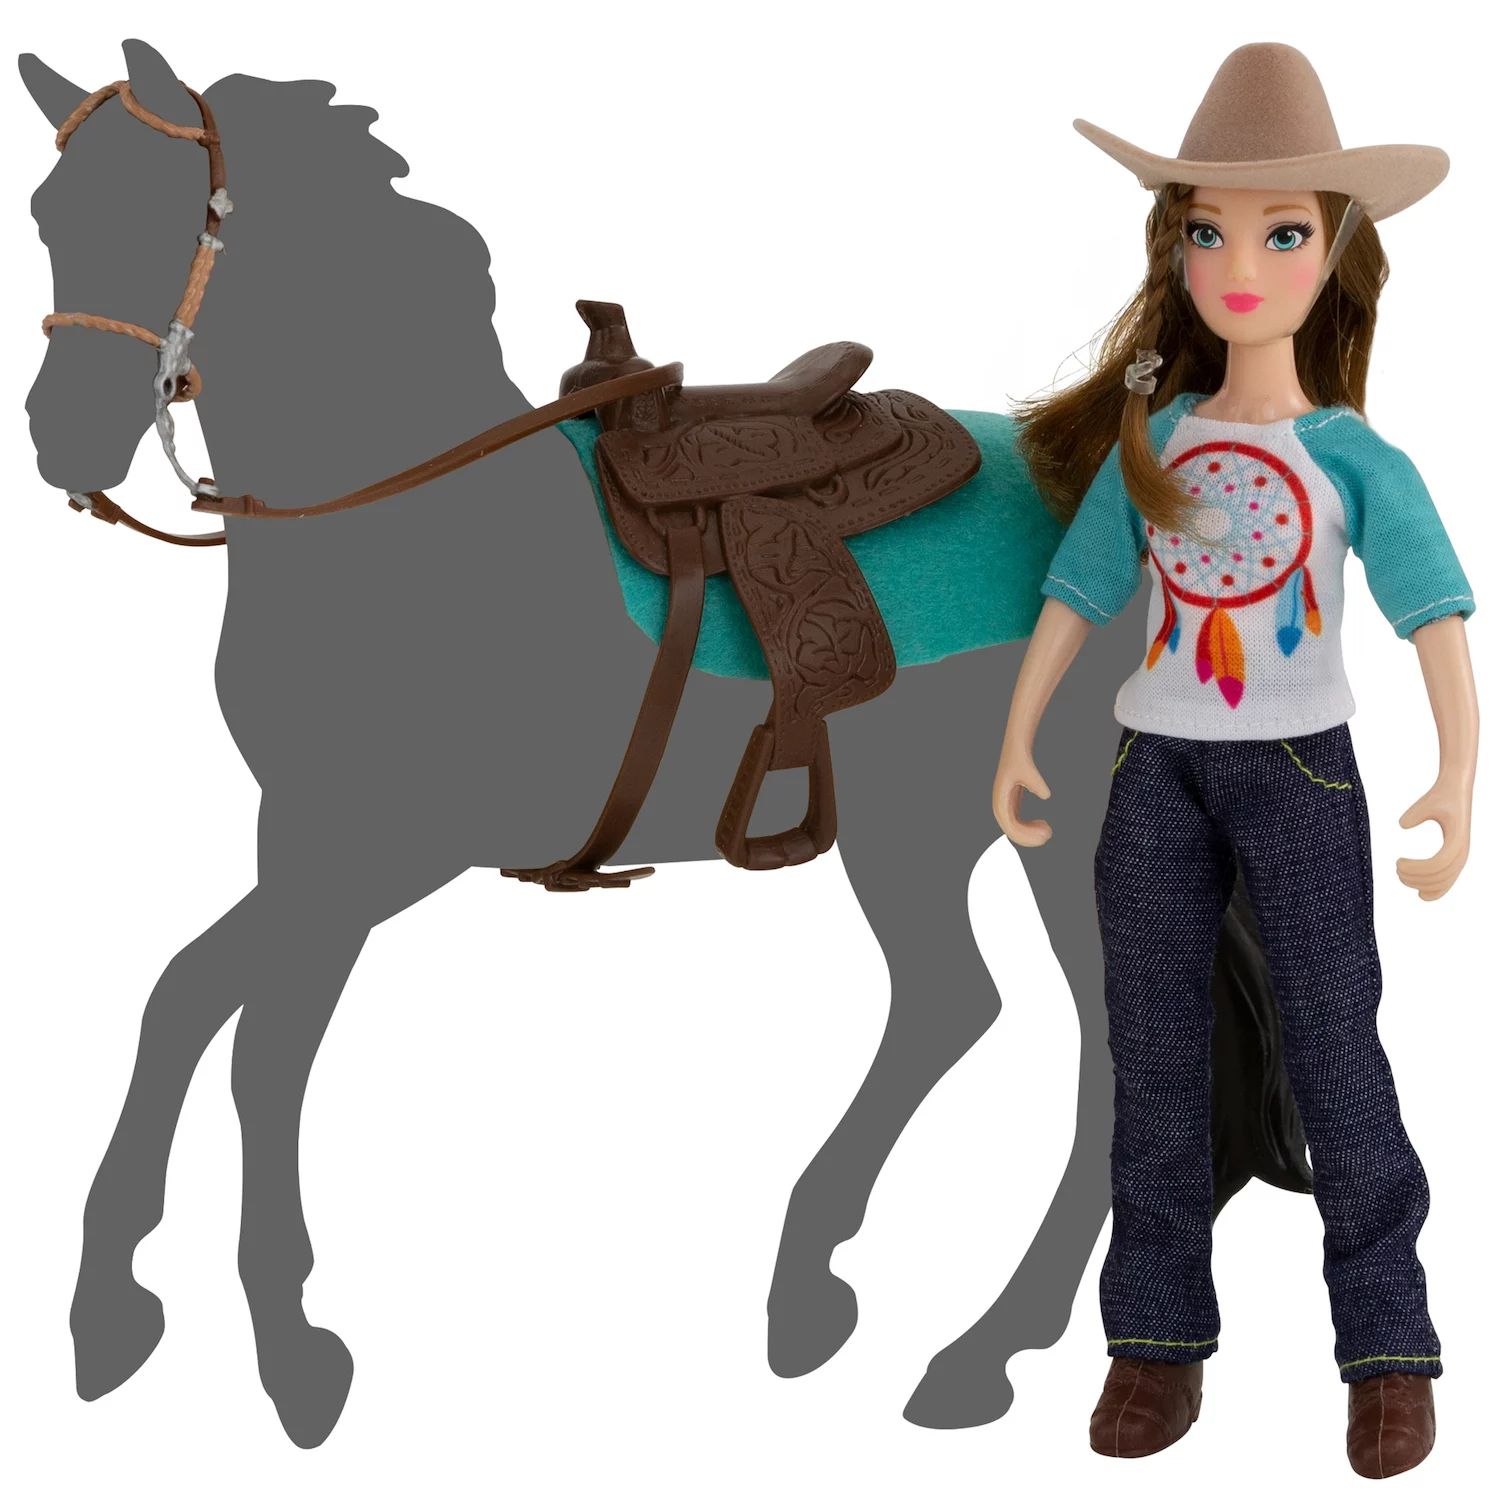 Классическая кукла Breyer Freedom Series Natalie Cowgirl и набор аксессуаров REEVES INTERNATIONAL reeves gemma victoria park